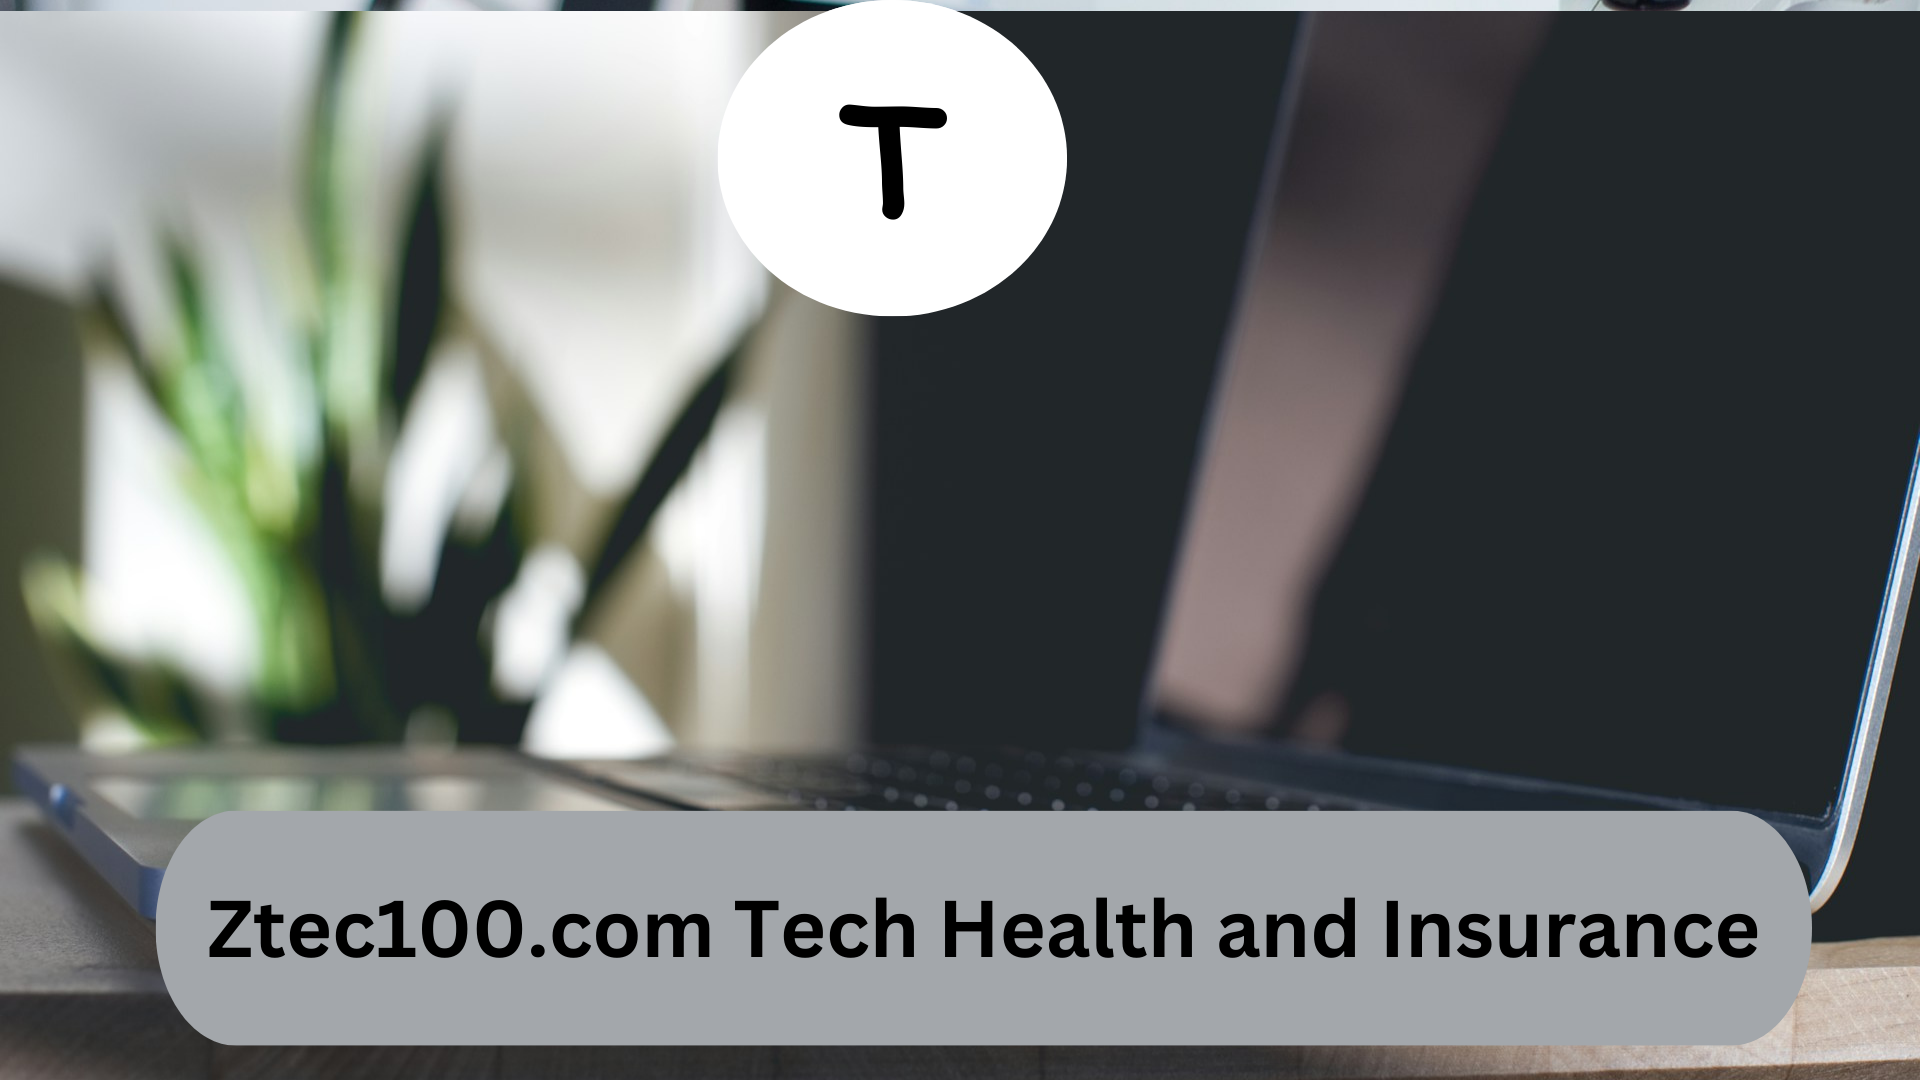 Ztec100.com Tech Health and Insurance